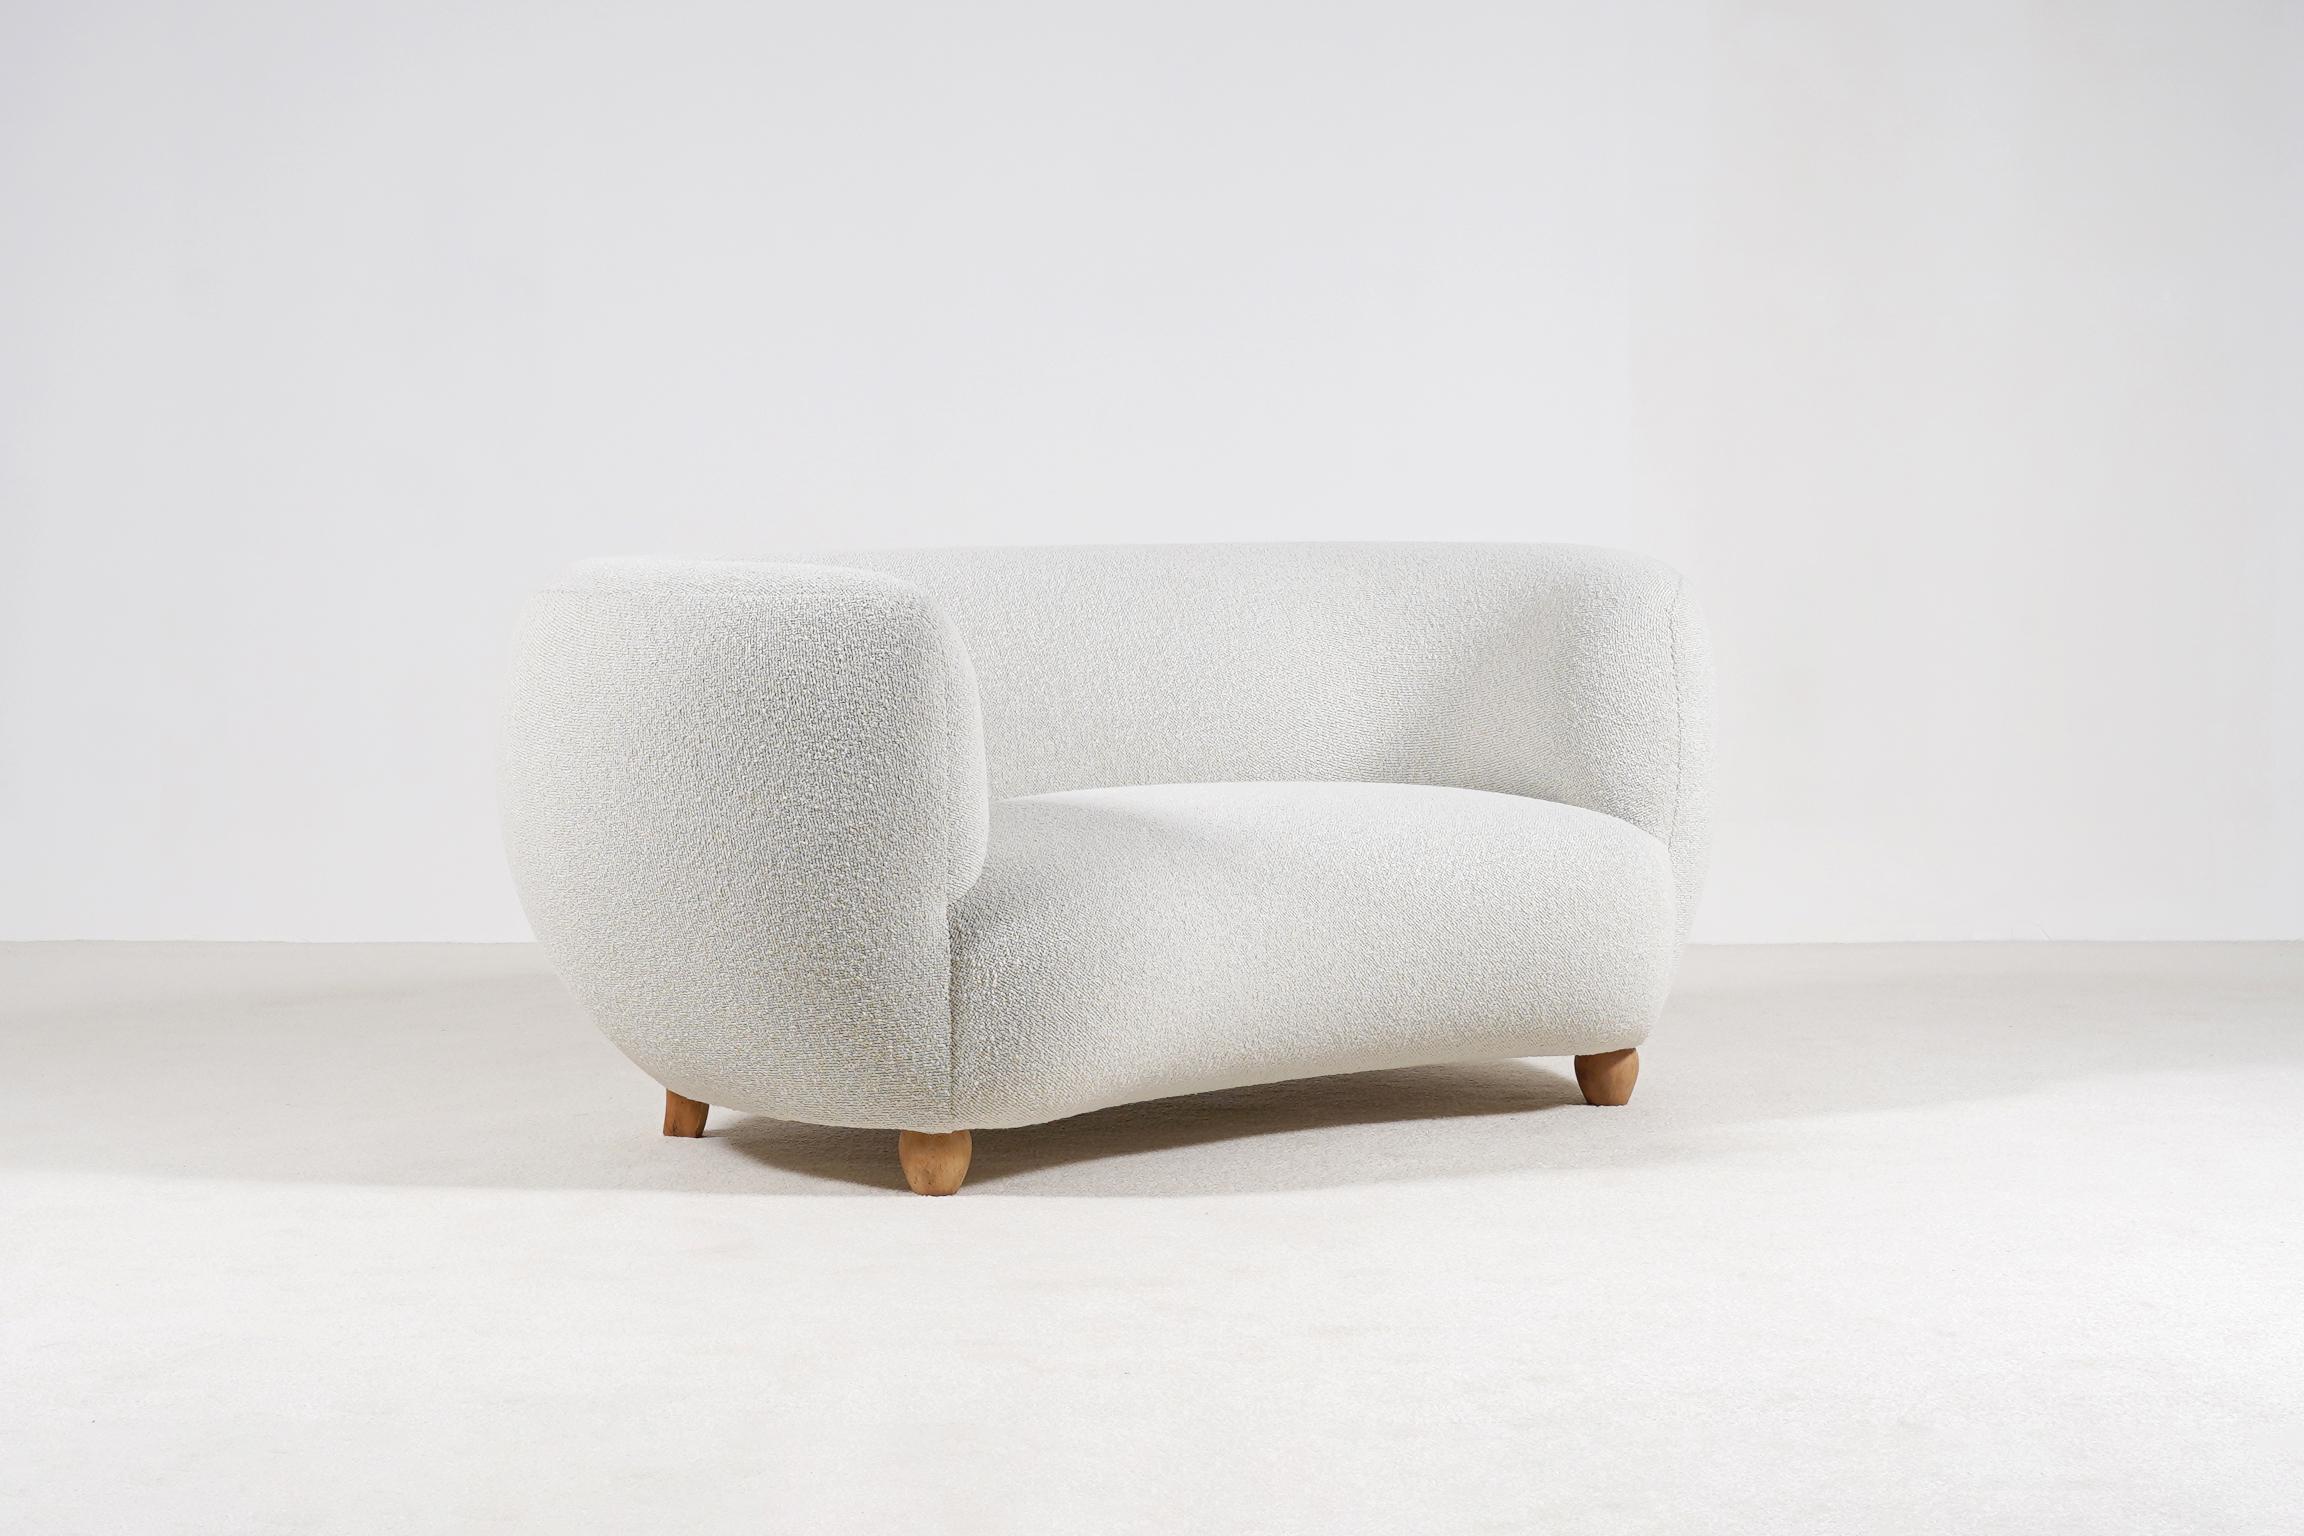 Scandinavian Modern Elegant Two-Seat Danish Curved Sofa, 1940s, New Bouclé Fabric Upholstery